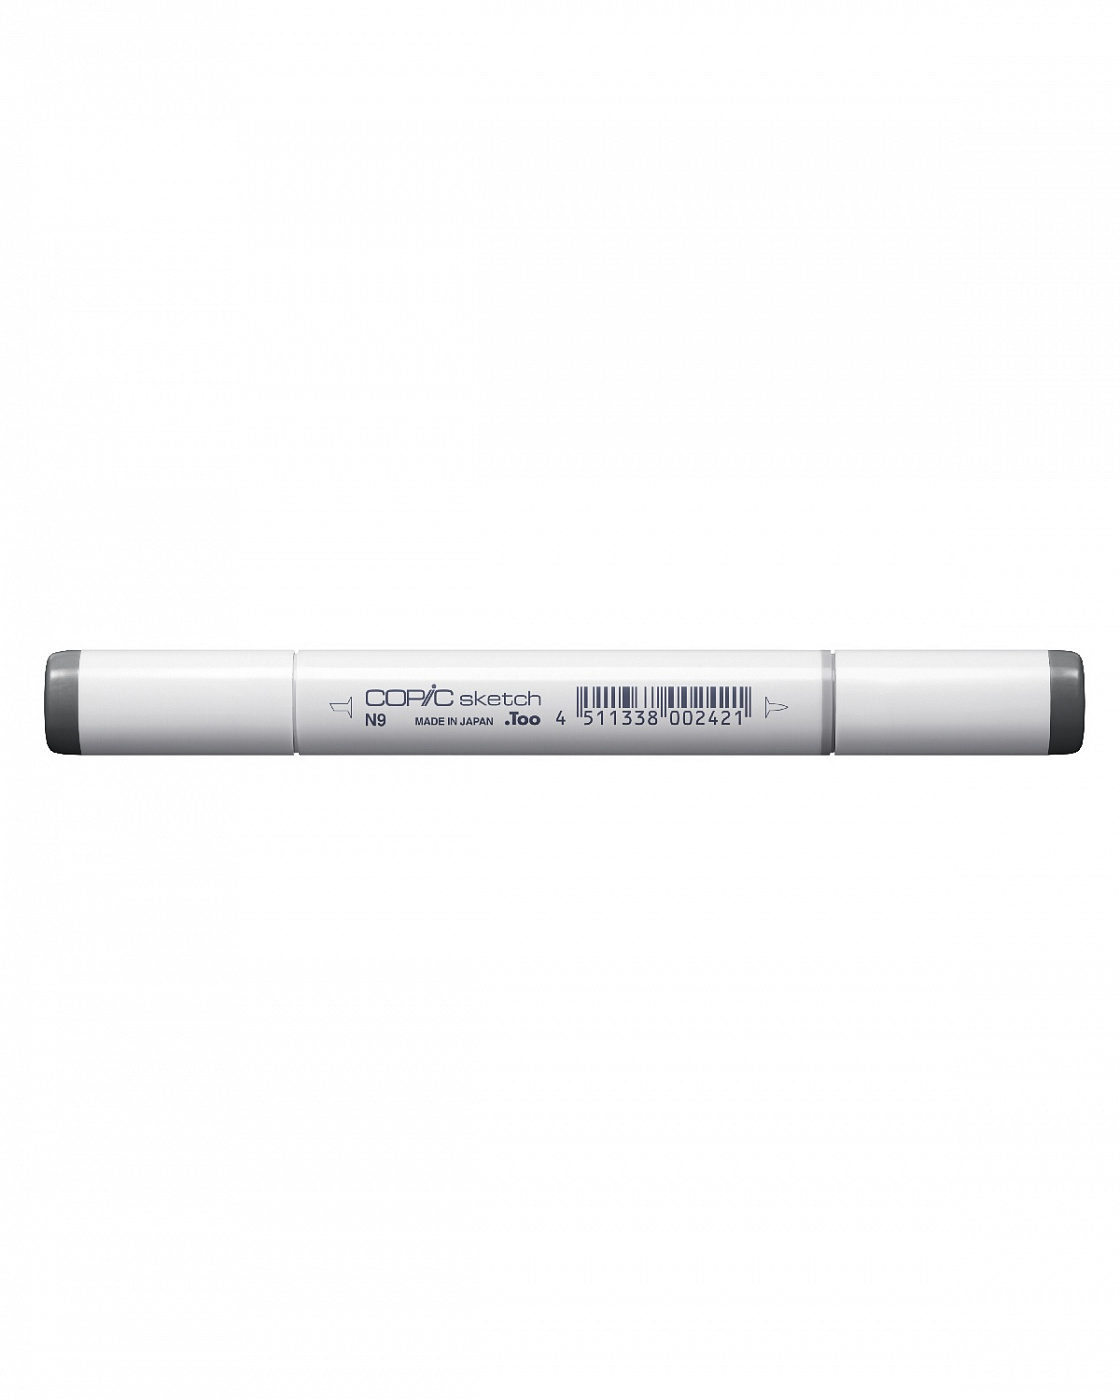 Маркер COPIC sketch N9 (нейтральный серый, neutral gray) (оттенок №9) маркер copic sketch t10 серый тон toner grey 10